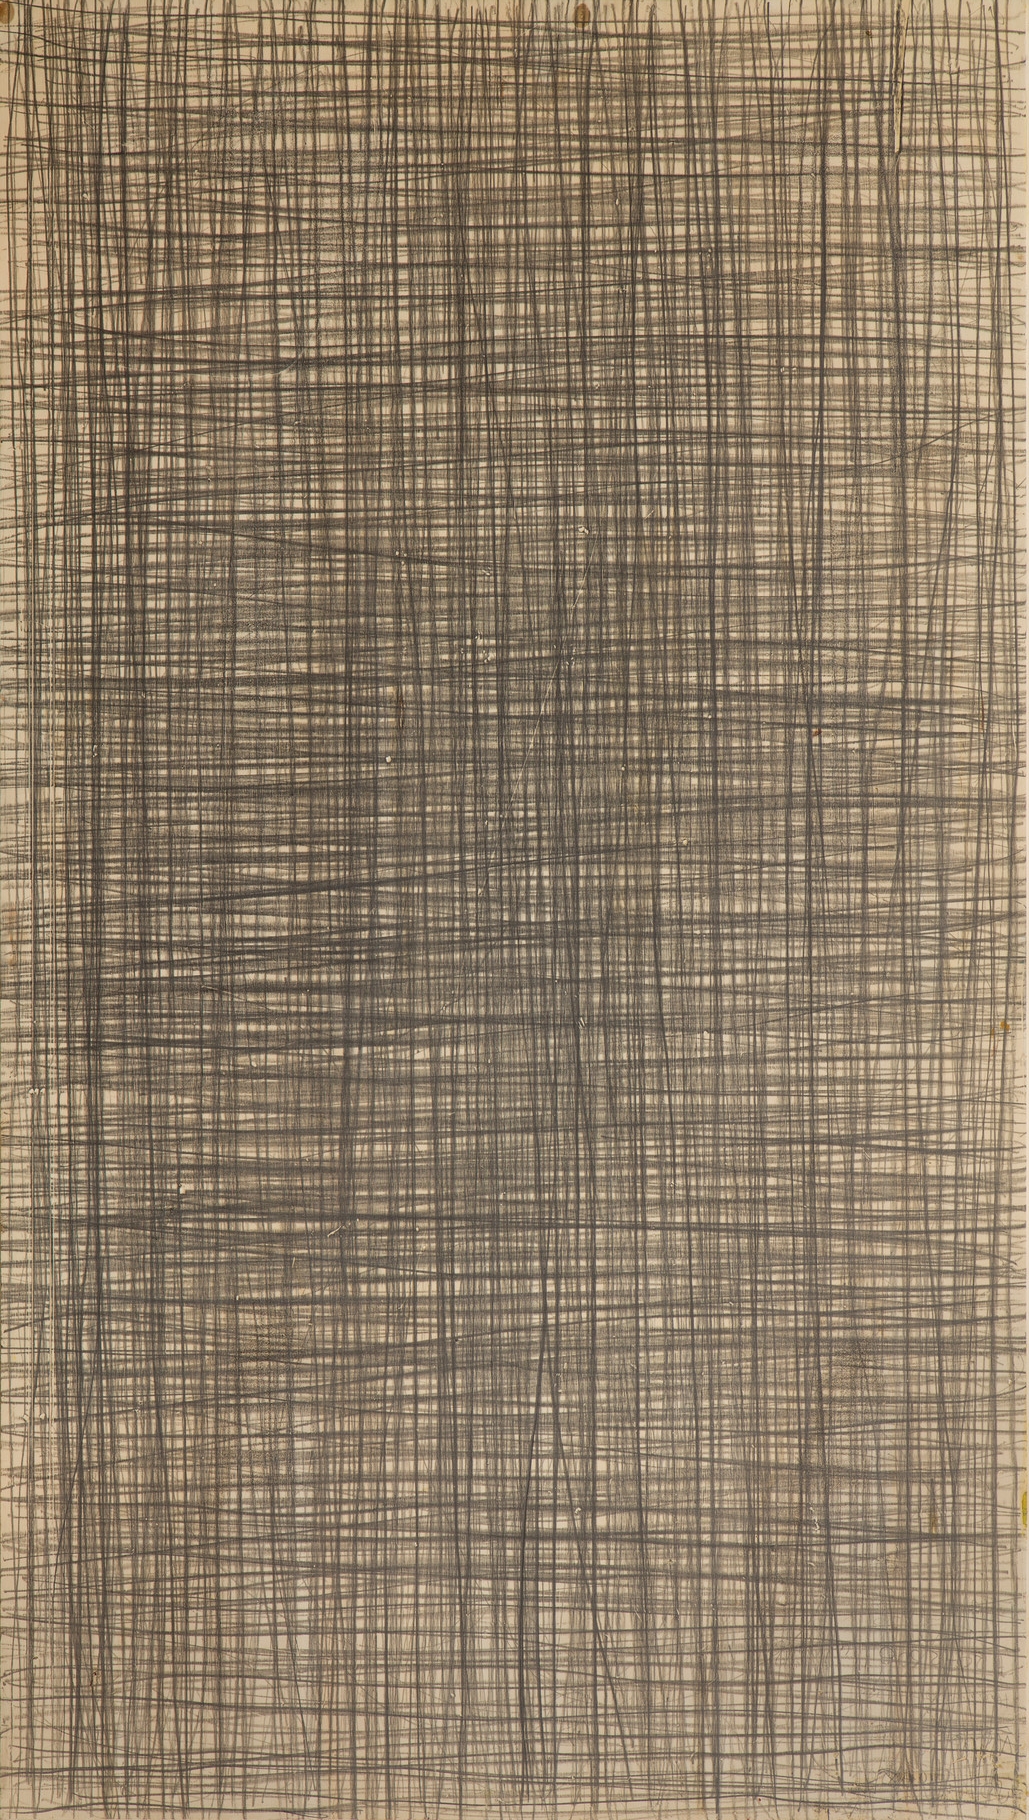 2002, graphite on ply wood, 110x200